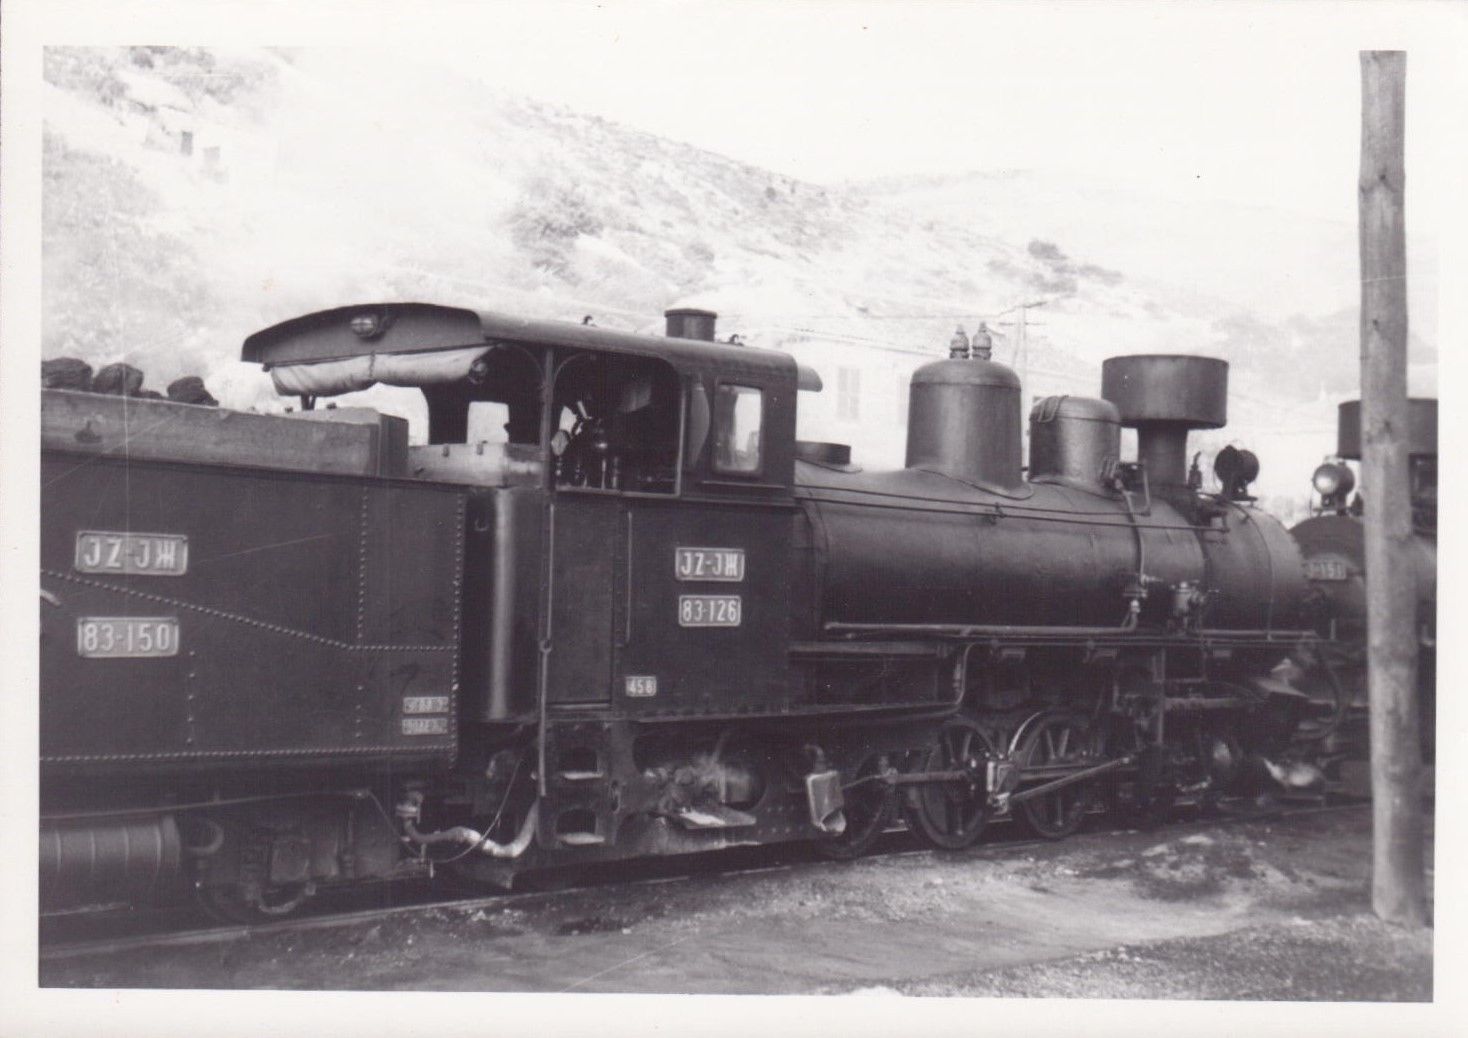 s-l1600 1960s original photograph. great view of a locomotive ( jz jw 83126 ) . france.jpg